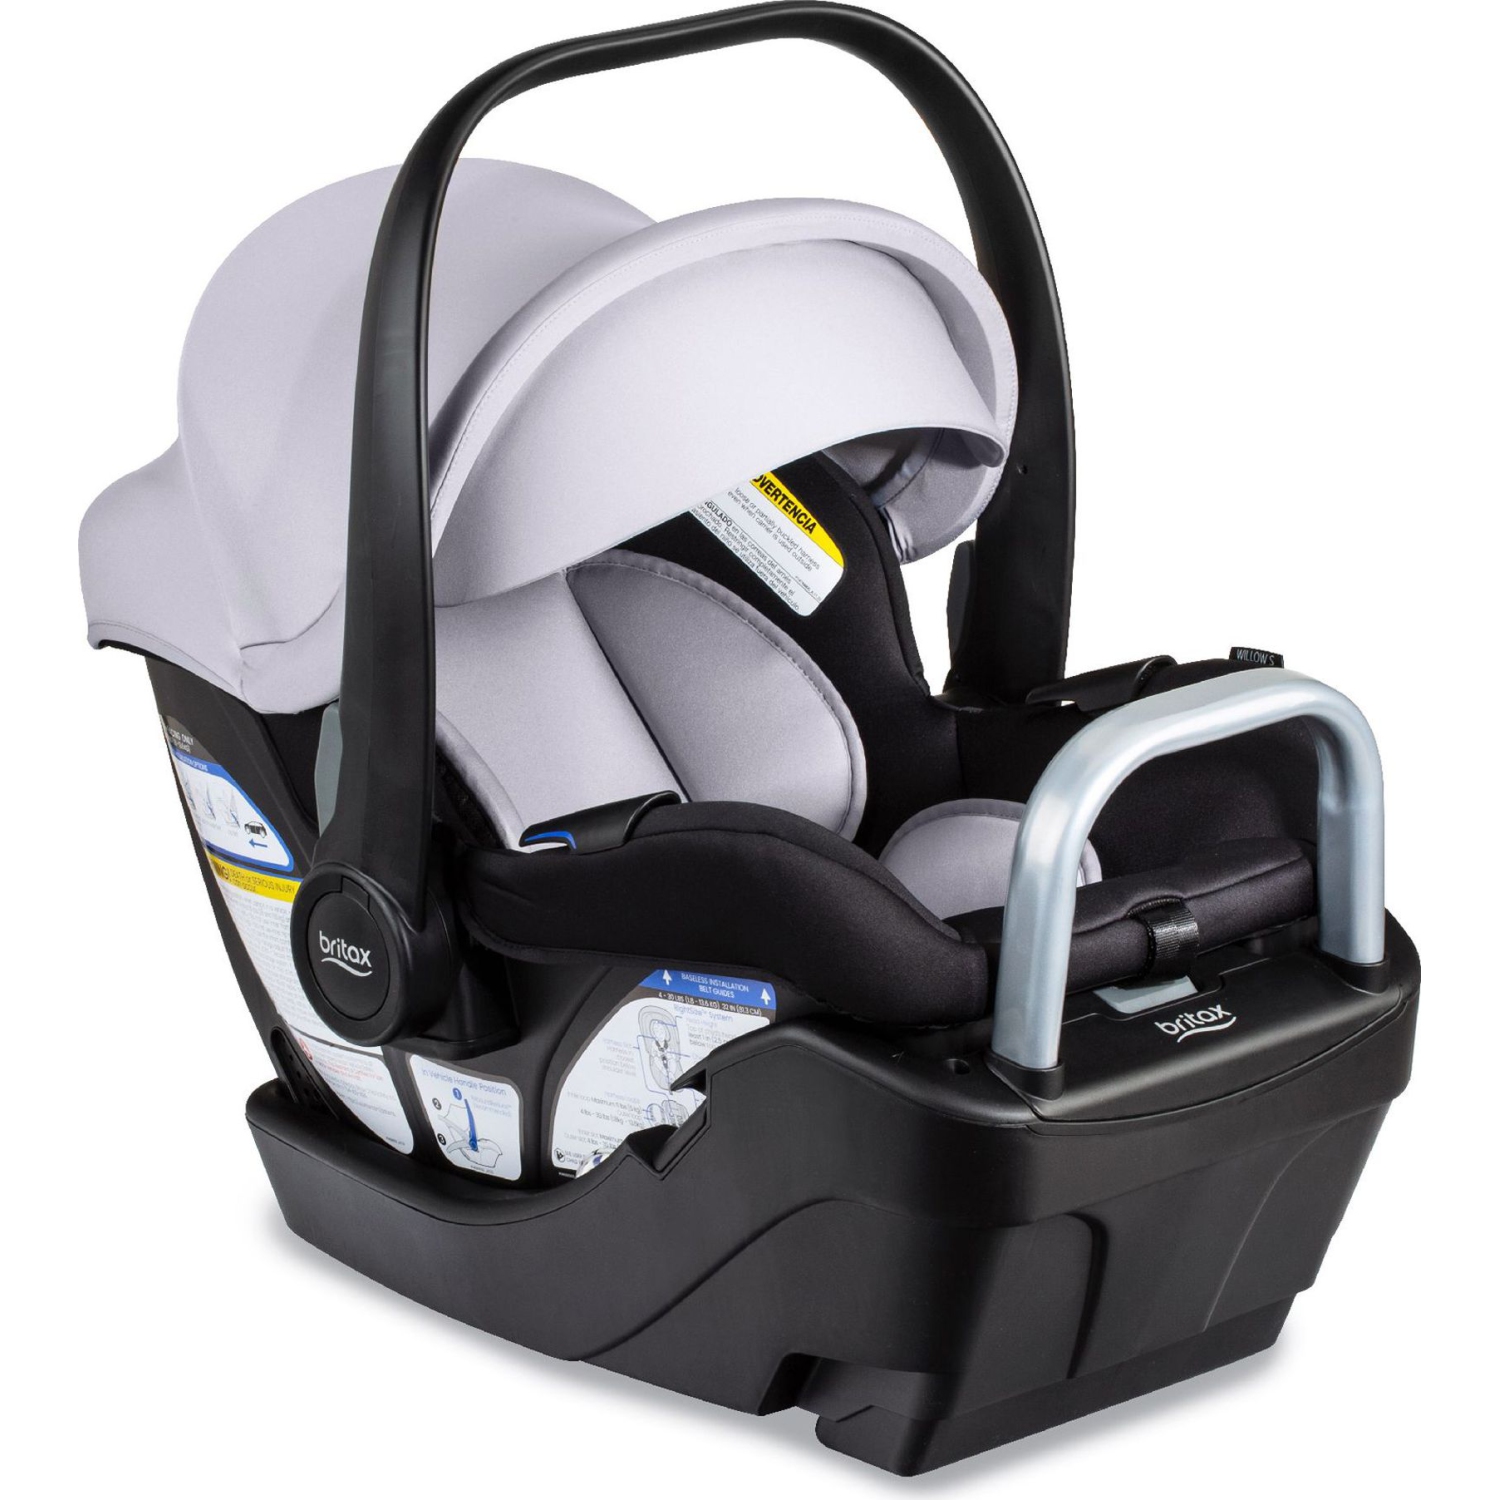 Britax Willow S Infant Car Seat - Glacier Onyx